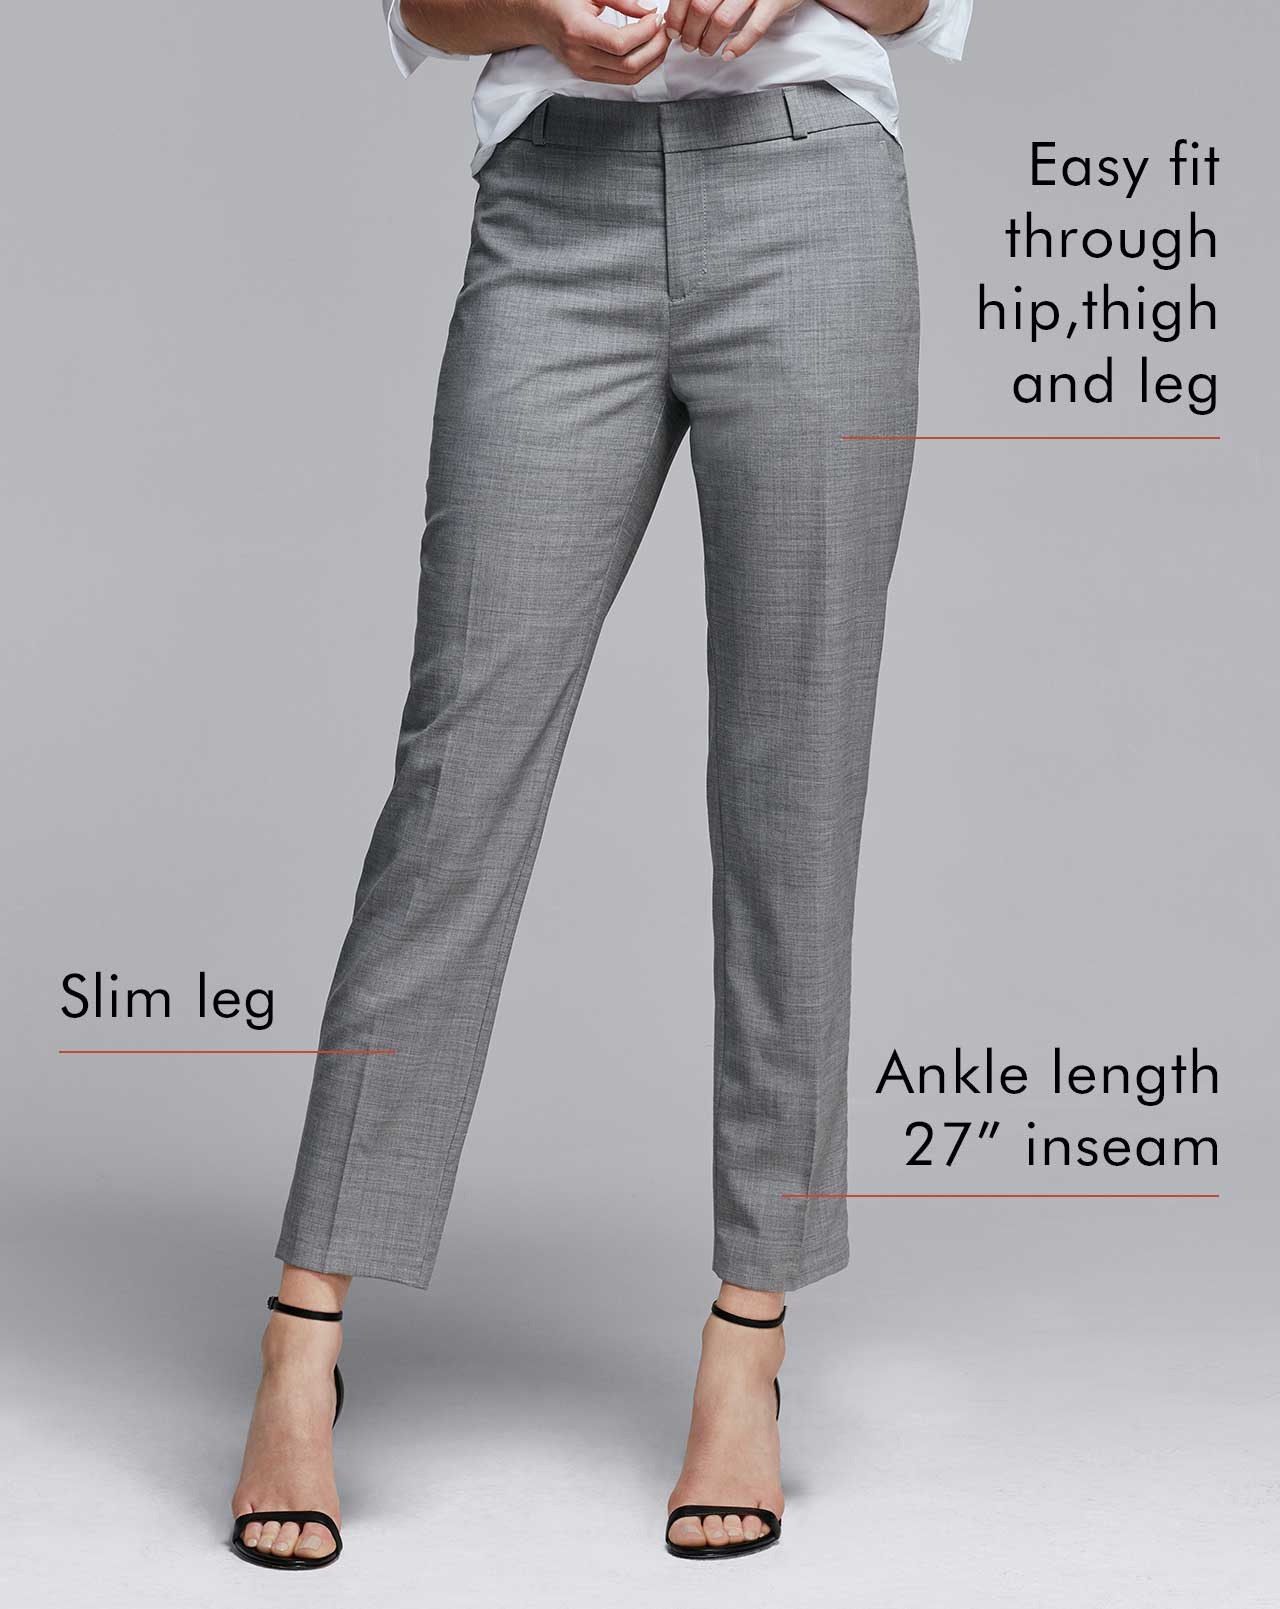 BodiLove Women's Ease in to Comfort Fit Stretch Slim Slacks Pants 